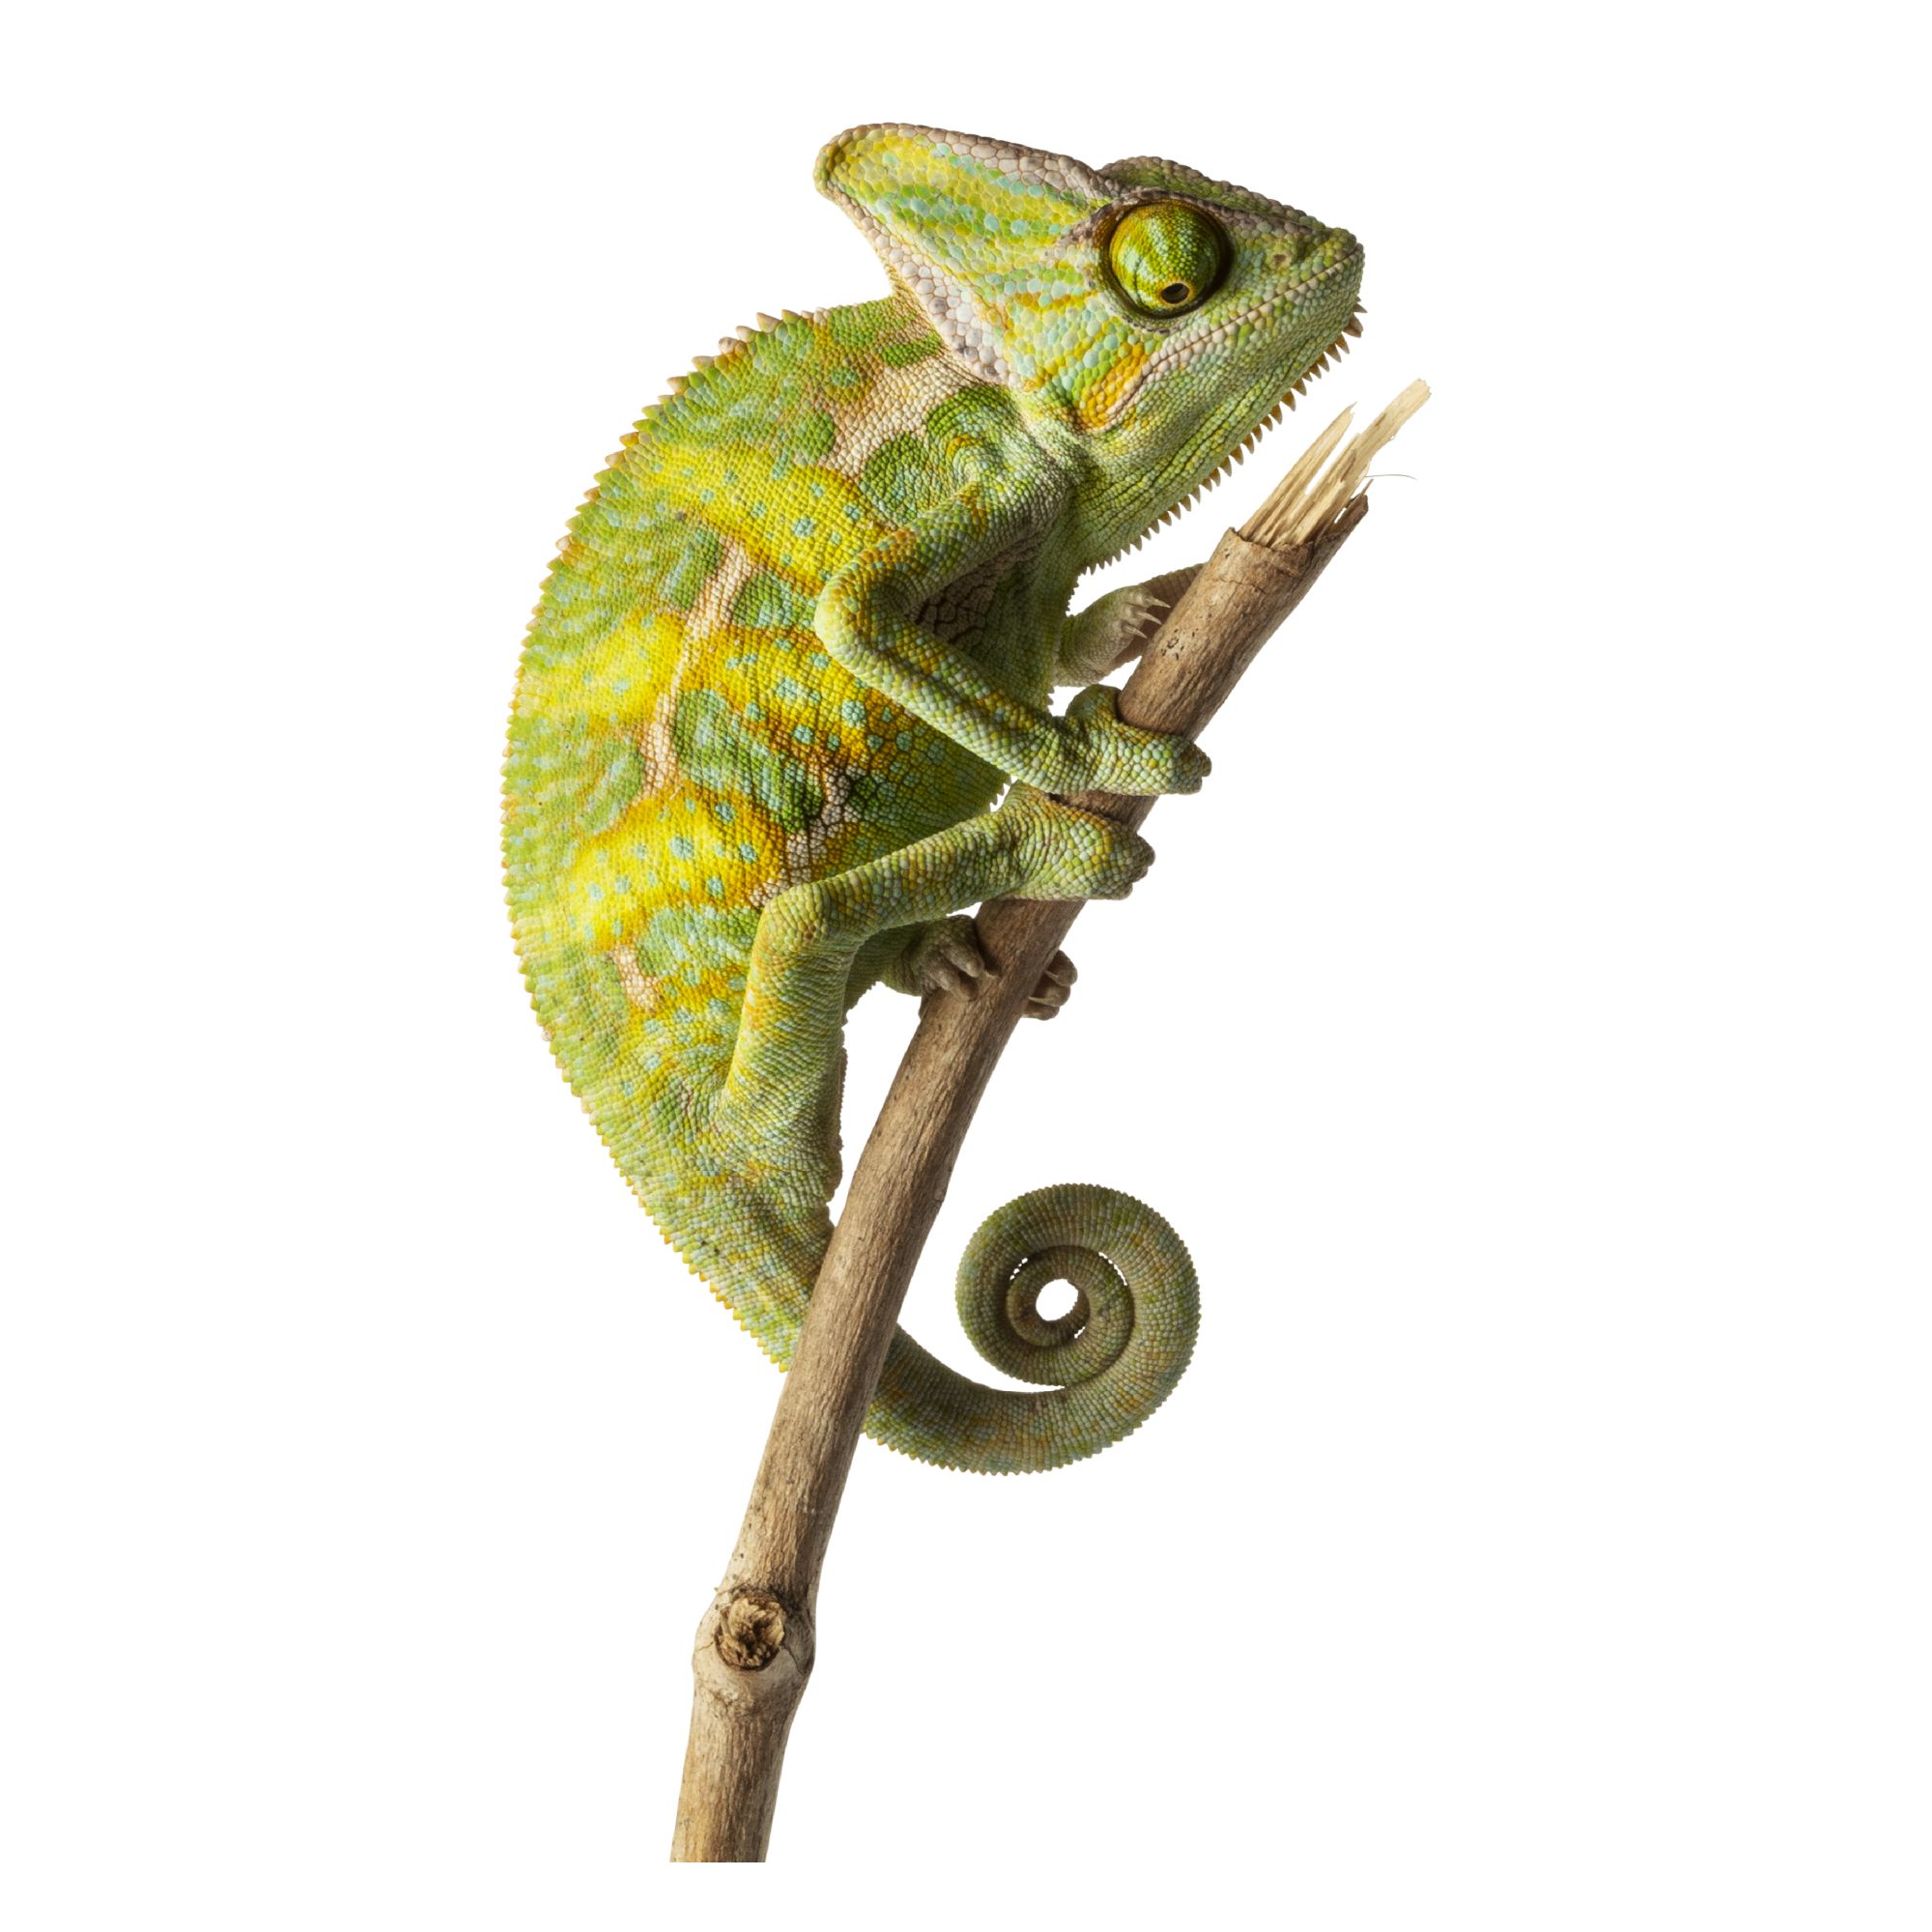 jackson chameleon for sale petco